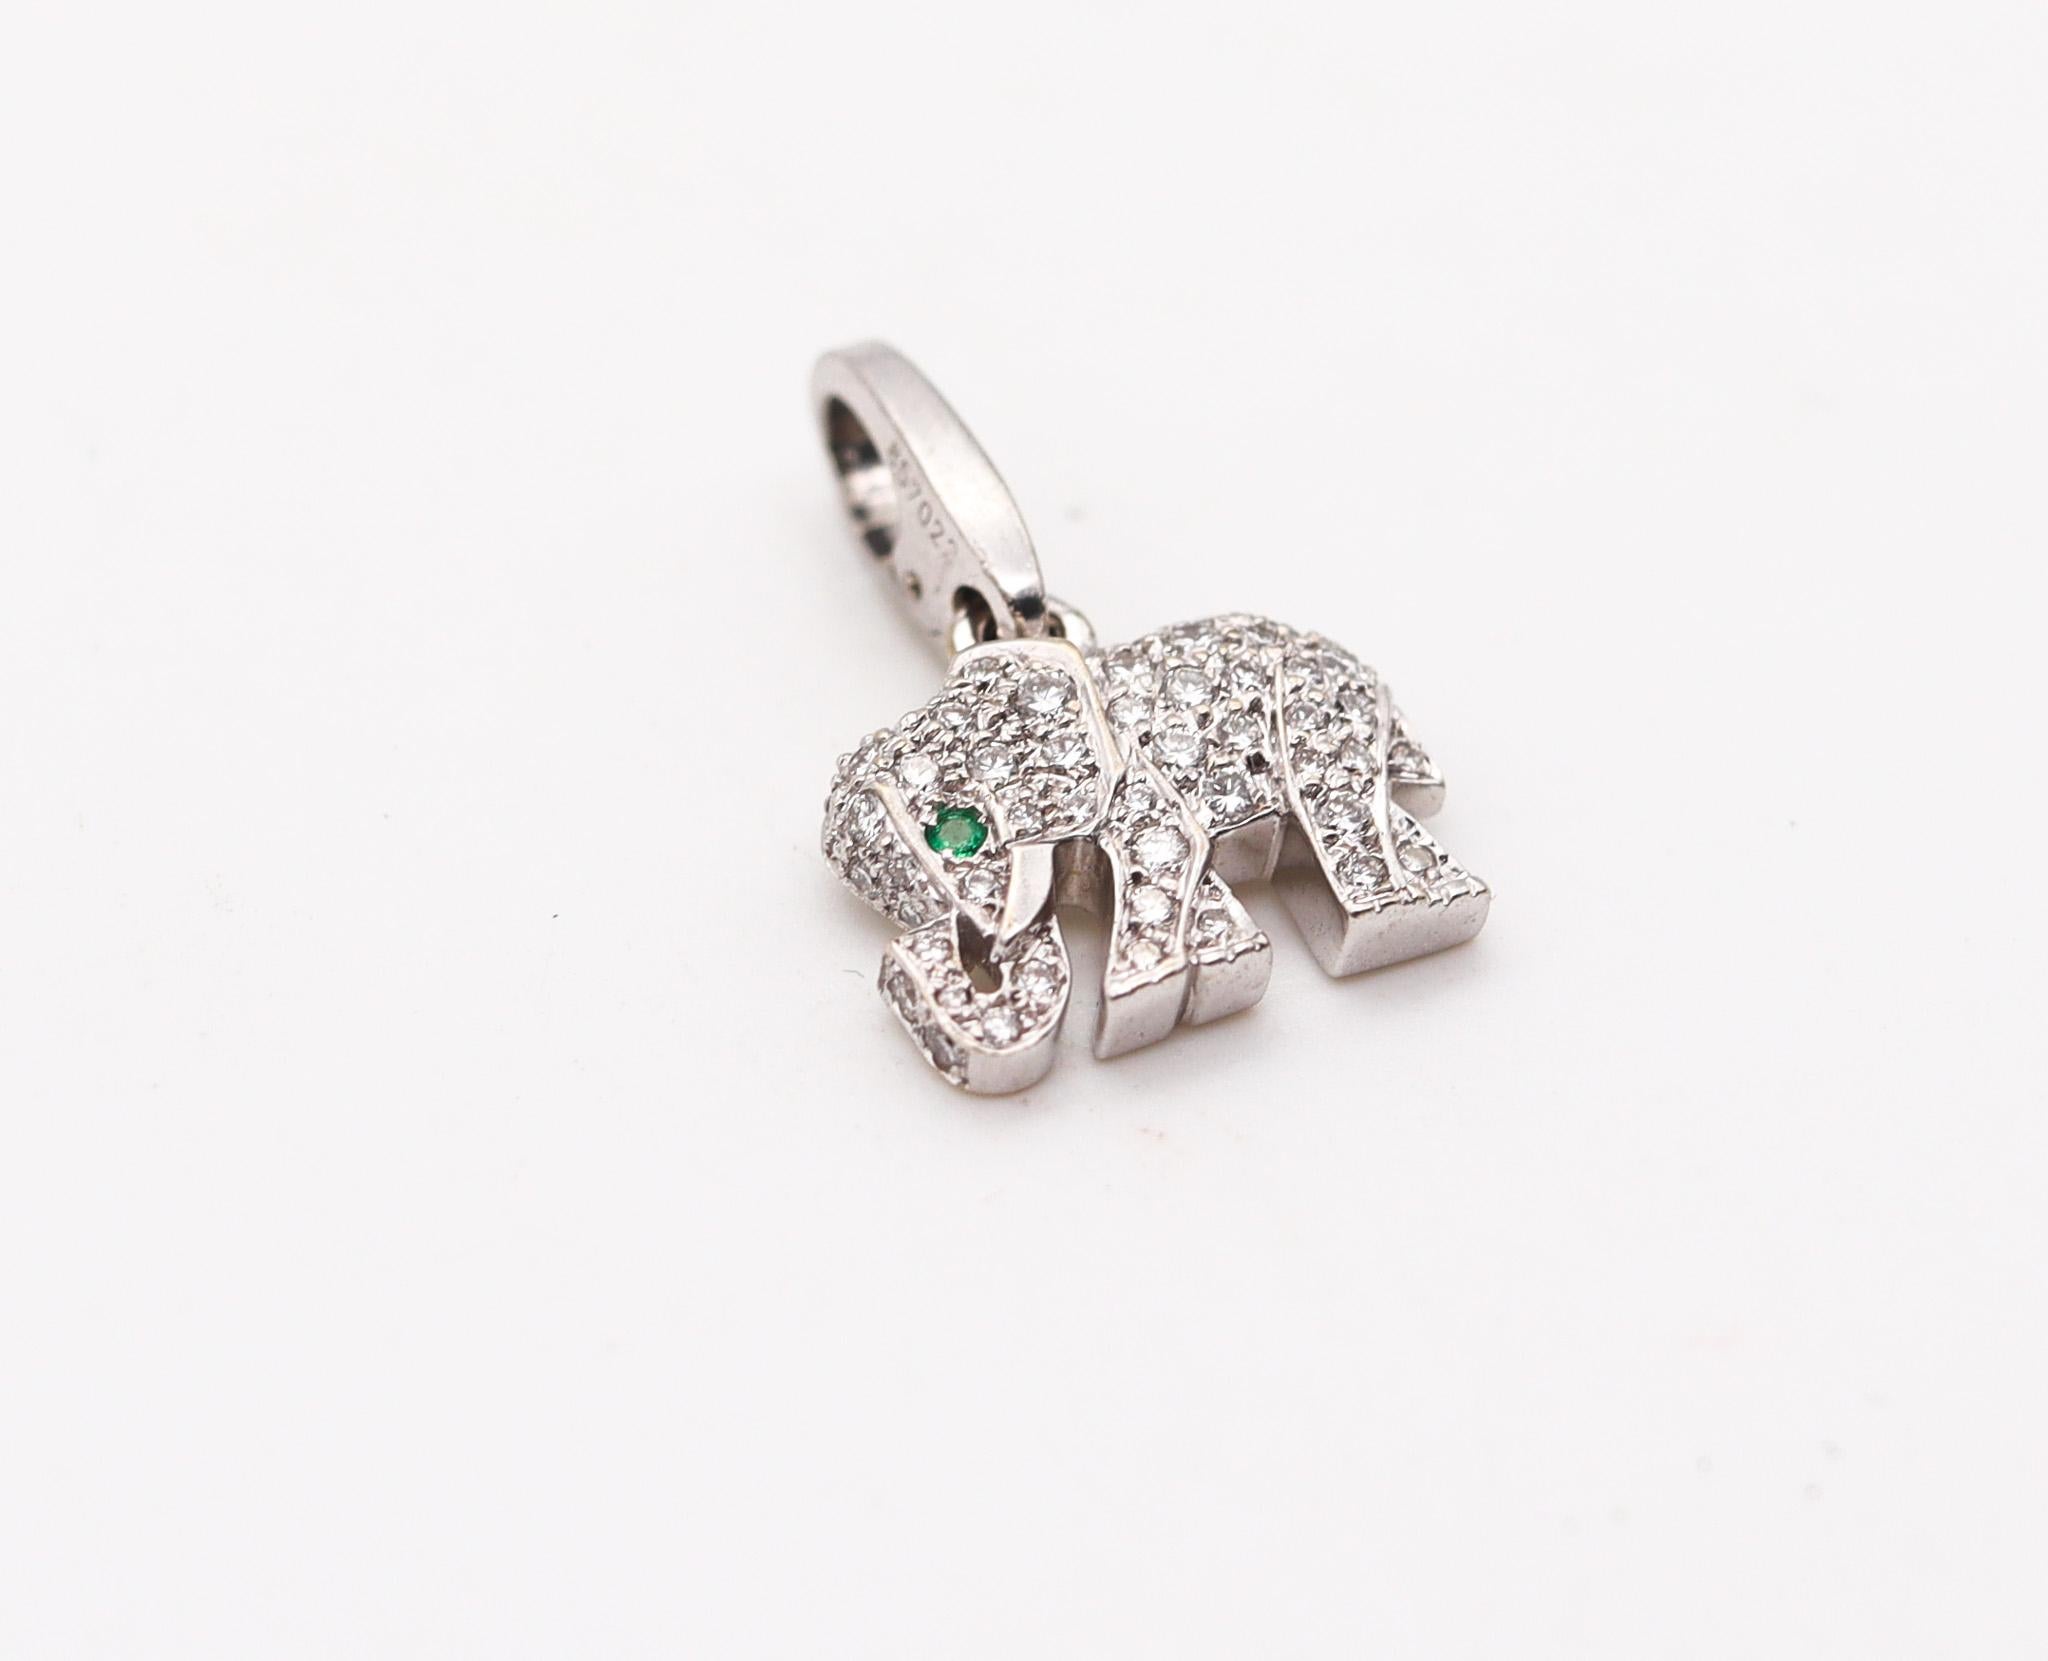 Modernist Cartier Paris Khandy Elephant Charm In 18Kt Gold With VVS Diamonds And Emerald